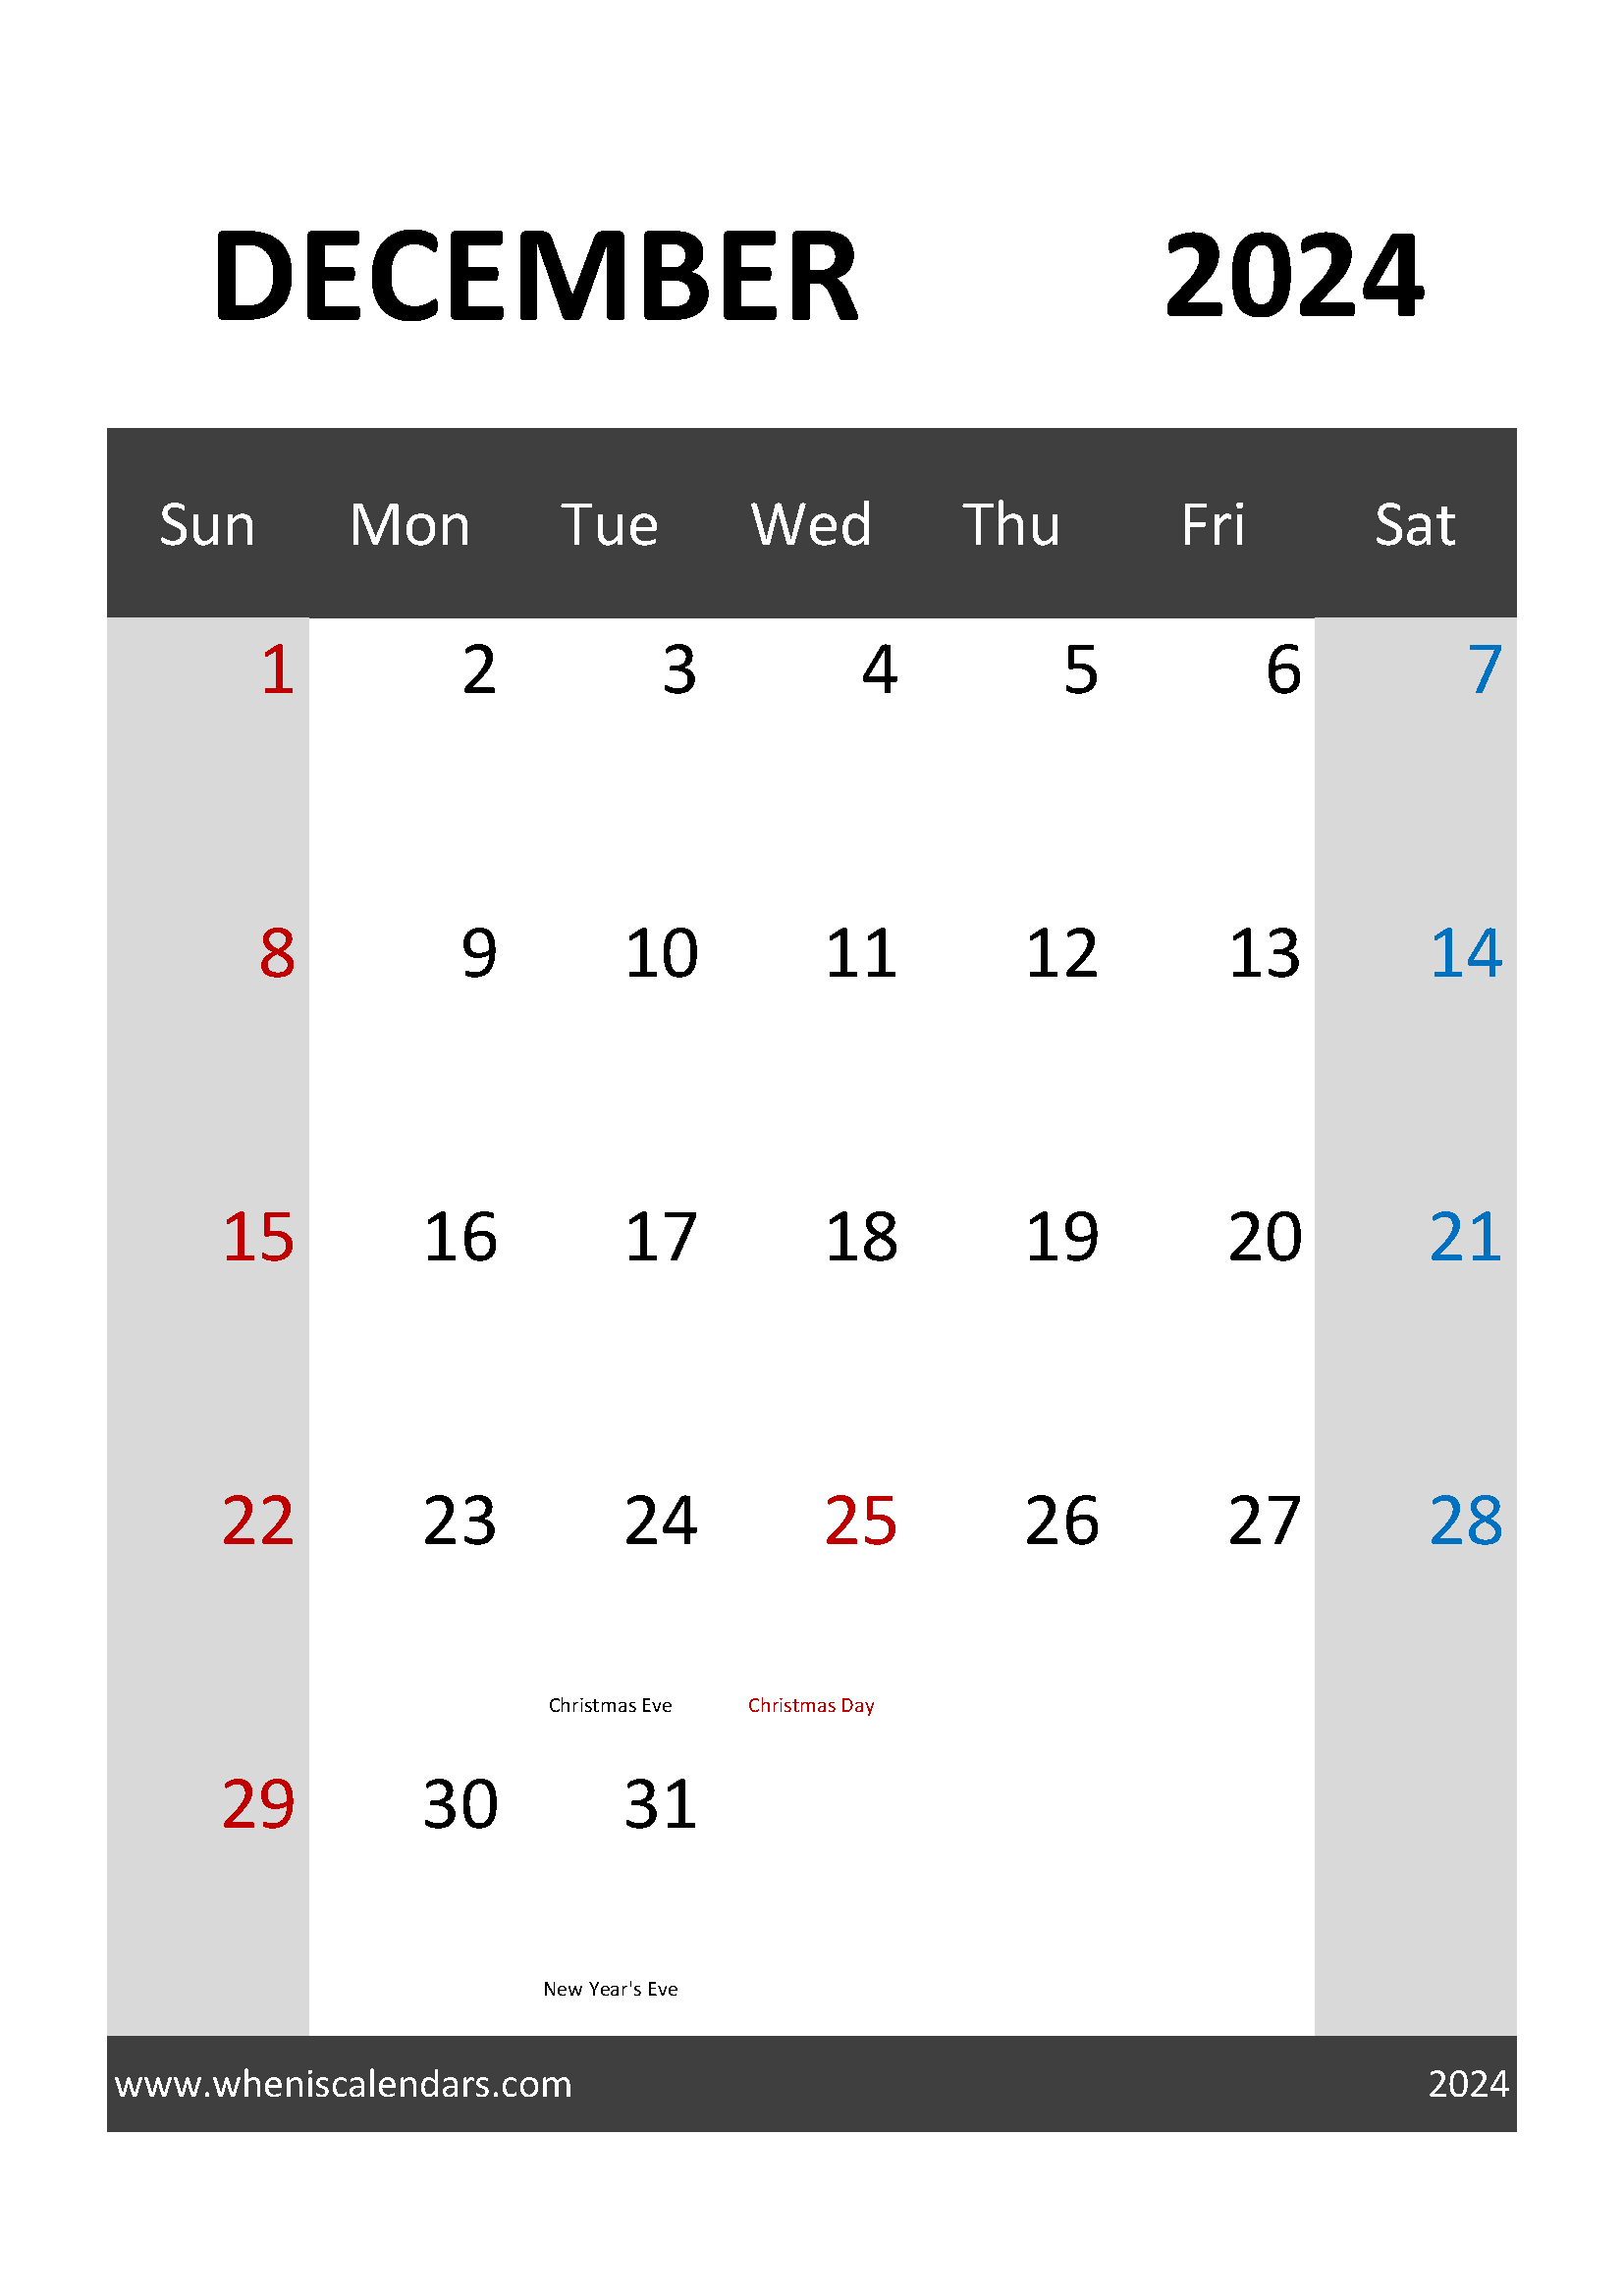 December 2024 Calendar planner Printable Monthly Calendar